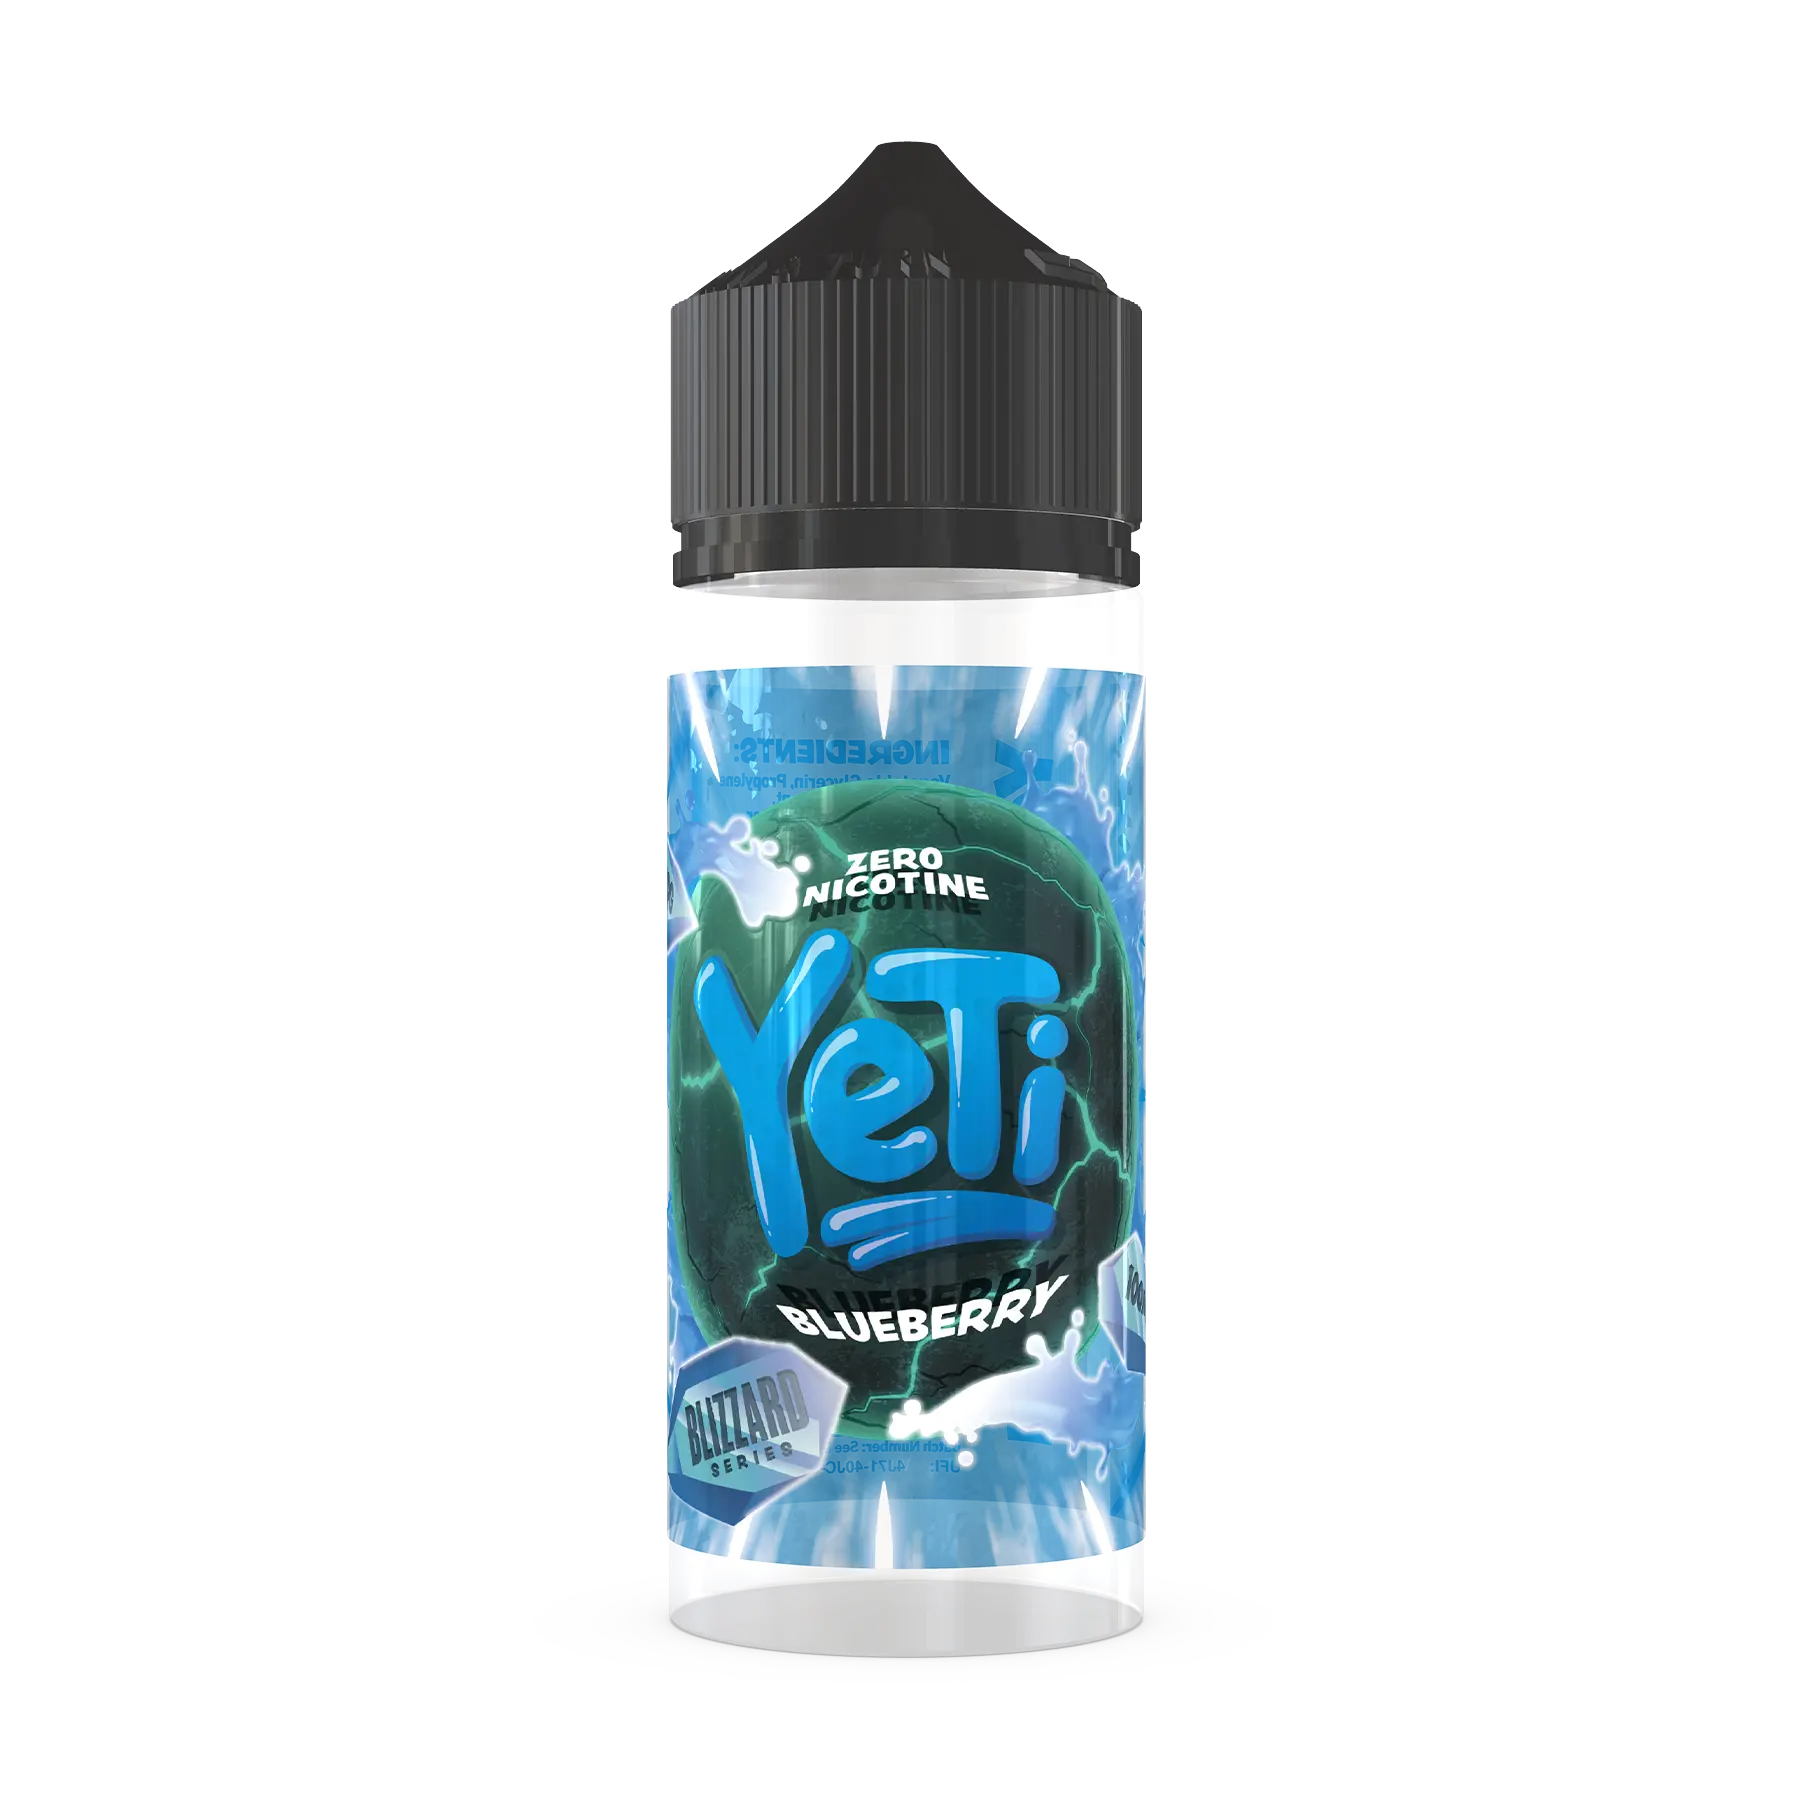 Yeti Blizzard - Blueberry 100ml E Liquid Shortfill